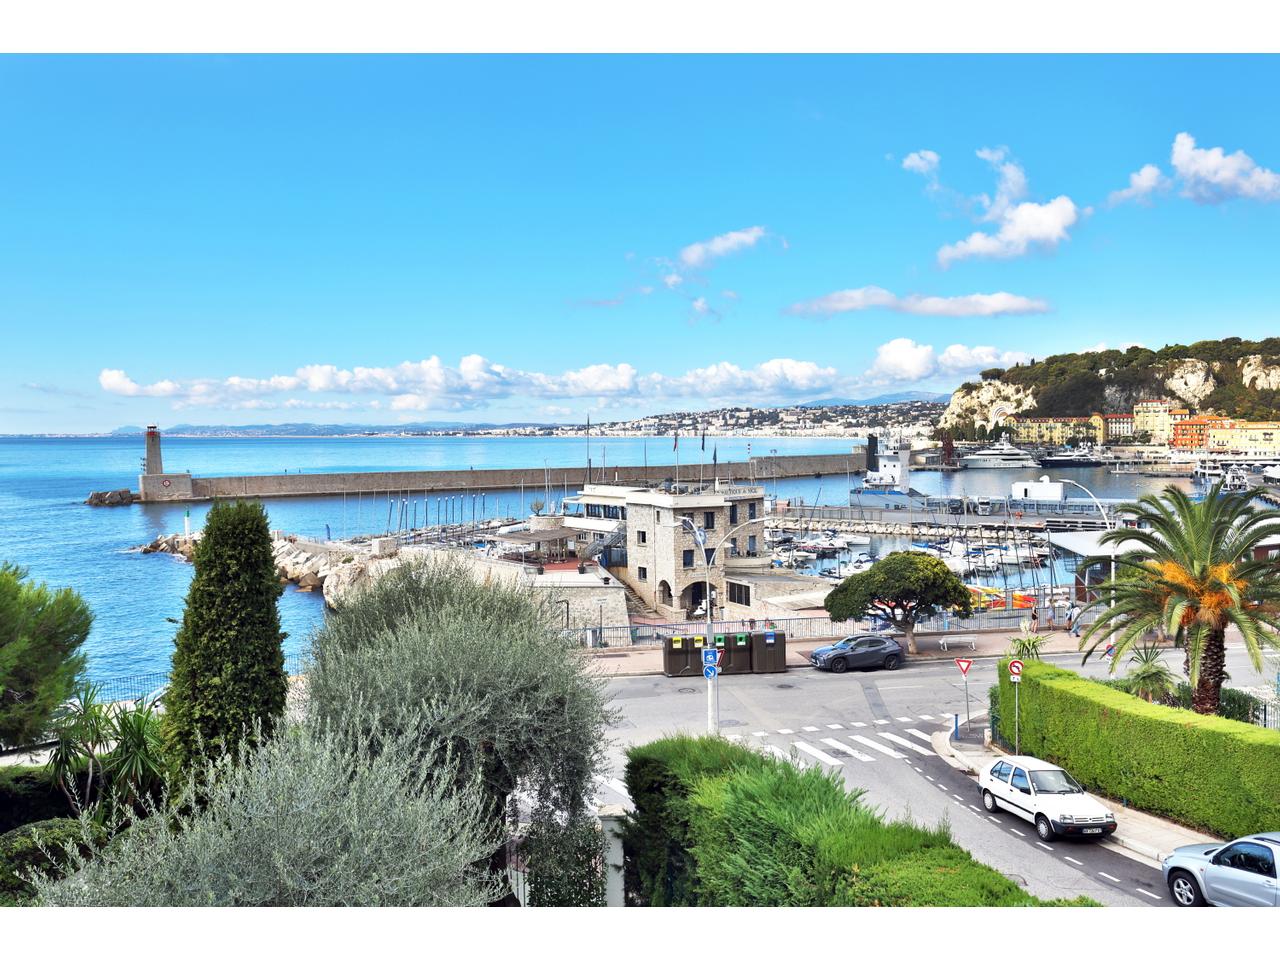 Nice Riviera - Agence Immobiliére Nice Côte d'Azur | NICE FRANCK PILATTE - SUPERBE APPARTEMENT AVEC TERRASSE ET VUE MER